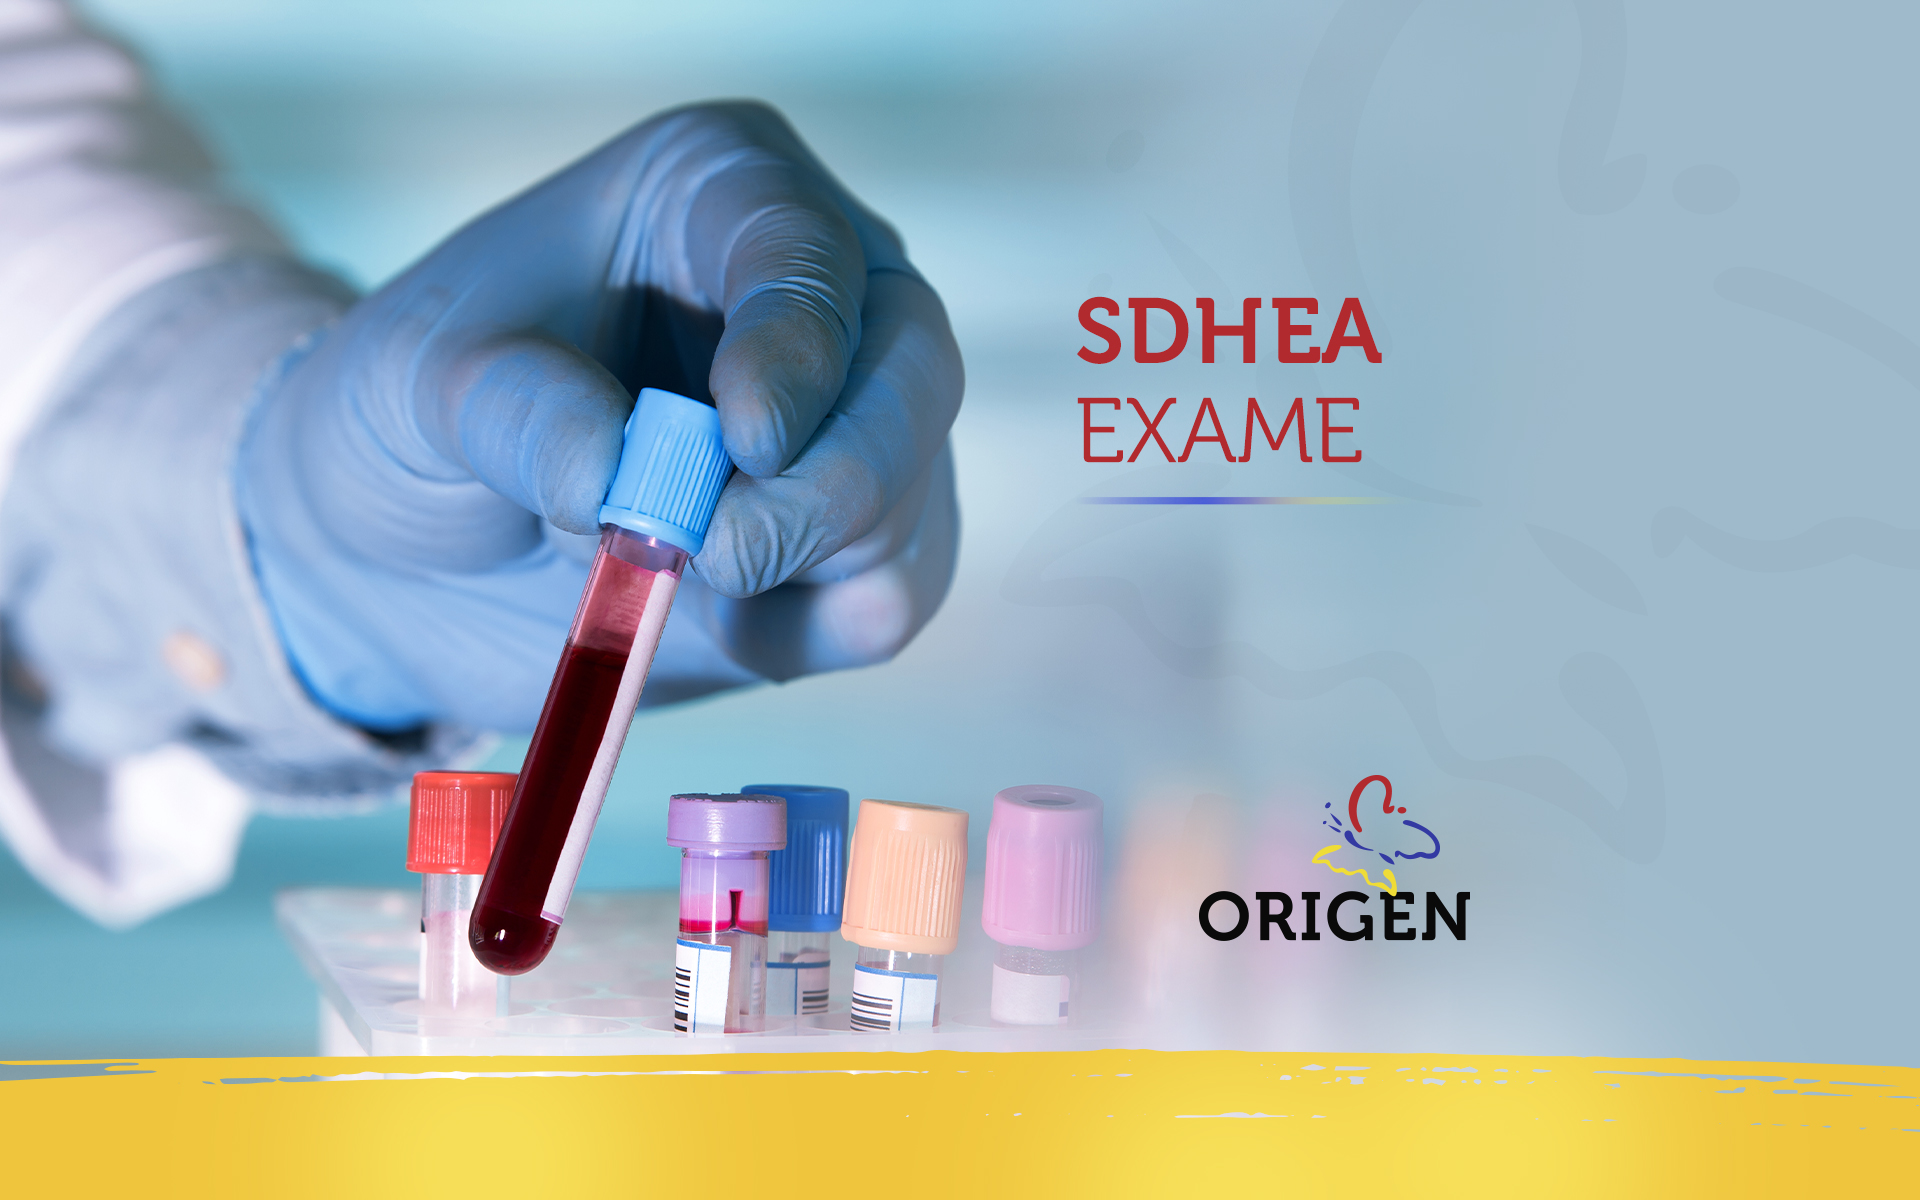 SDHEA exame